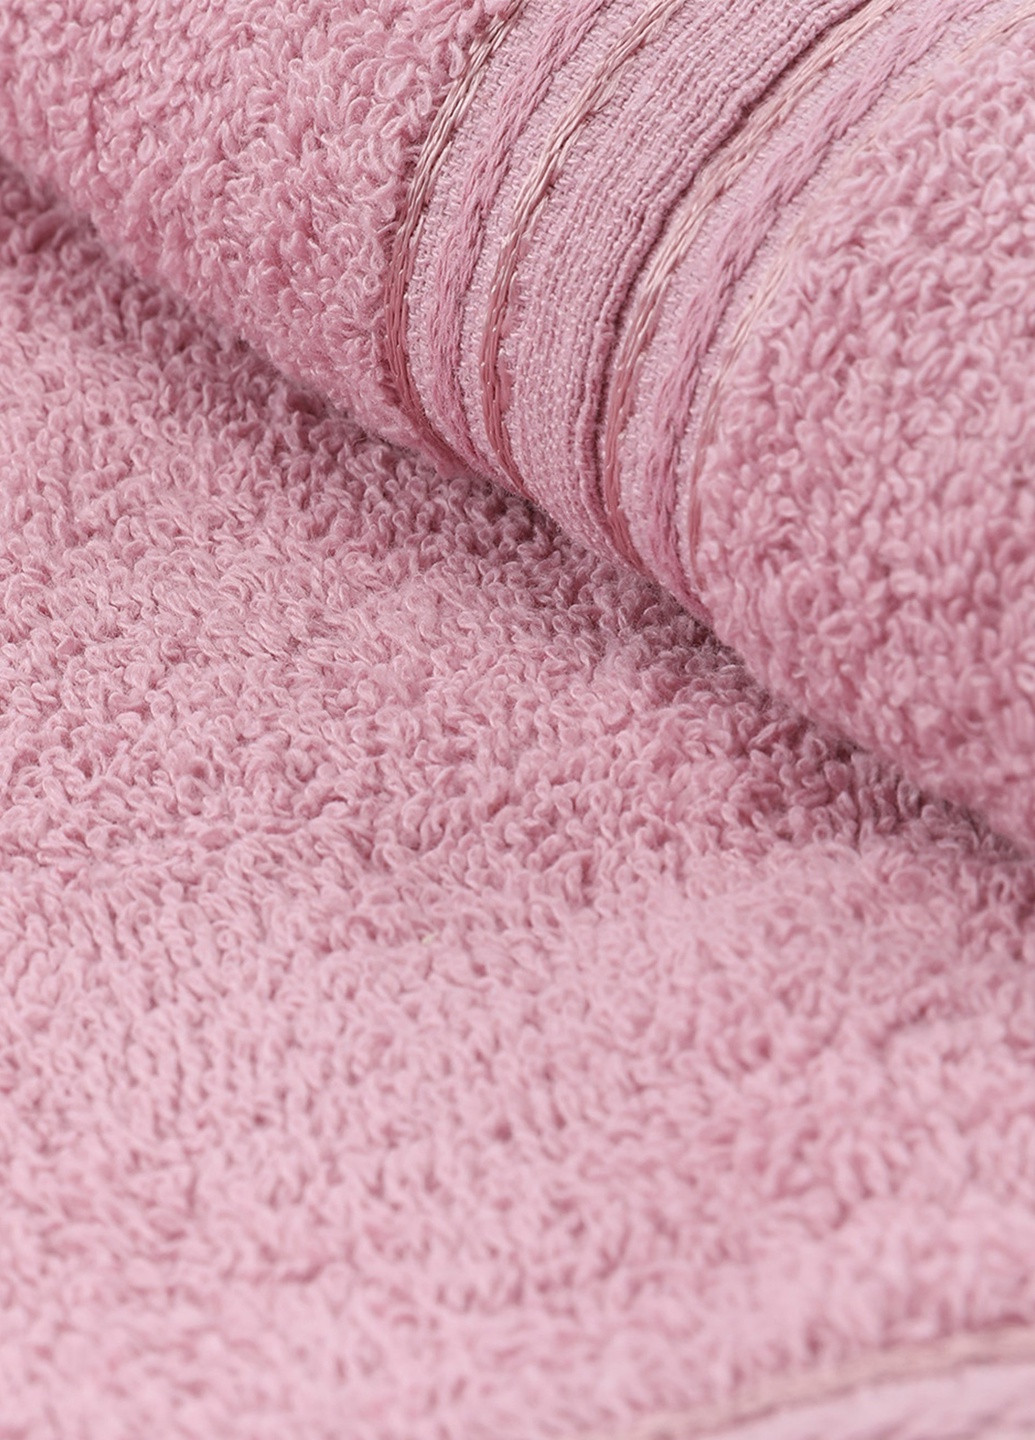 TURComFor набор турецких полотенец для ванной 2 шт (150x90 см, 90x50 см ) розовый производство - Турция